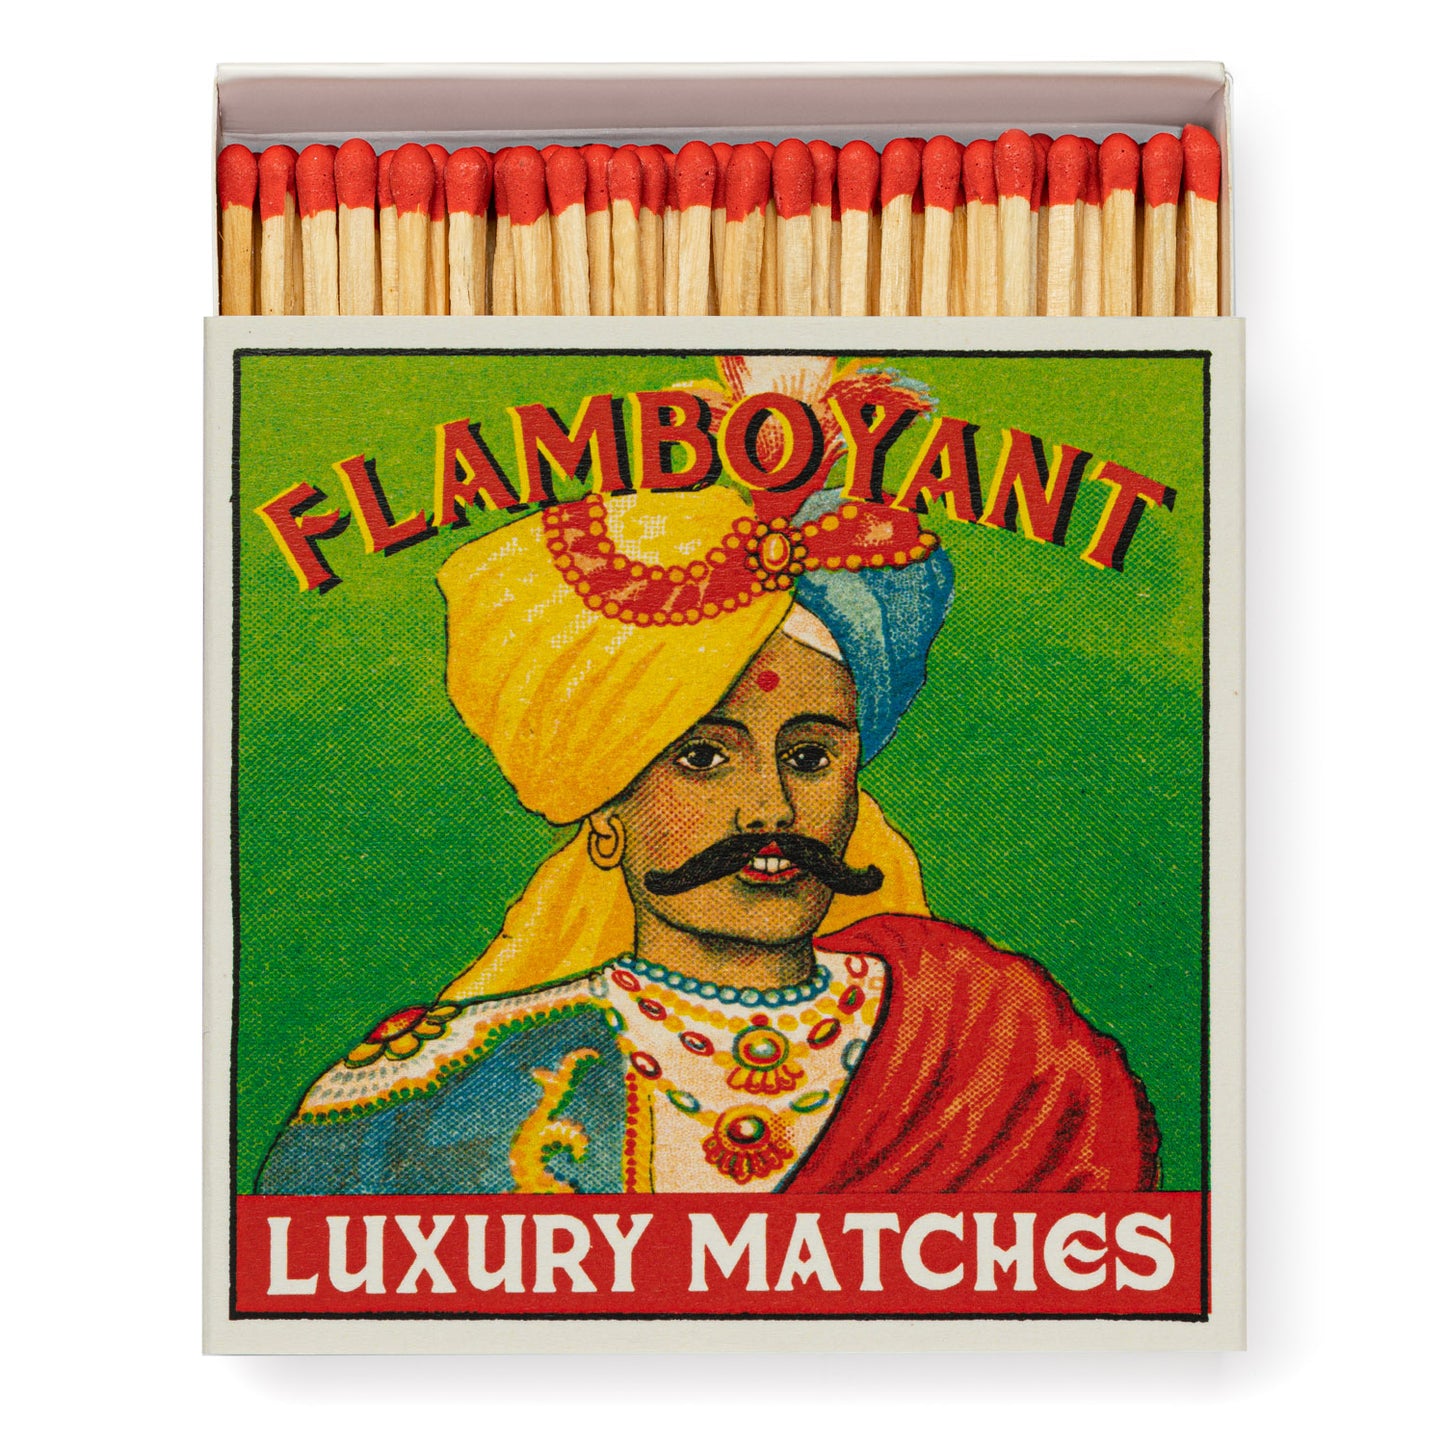 luxury matches with Mr. Flamboyant illustration